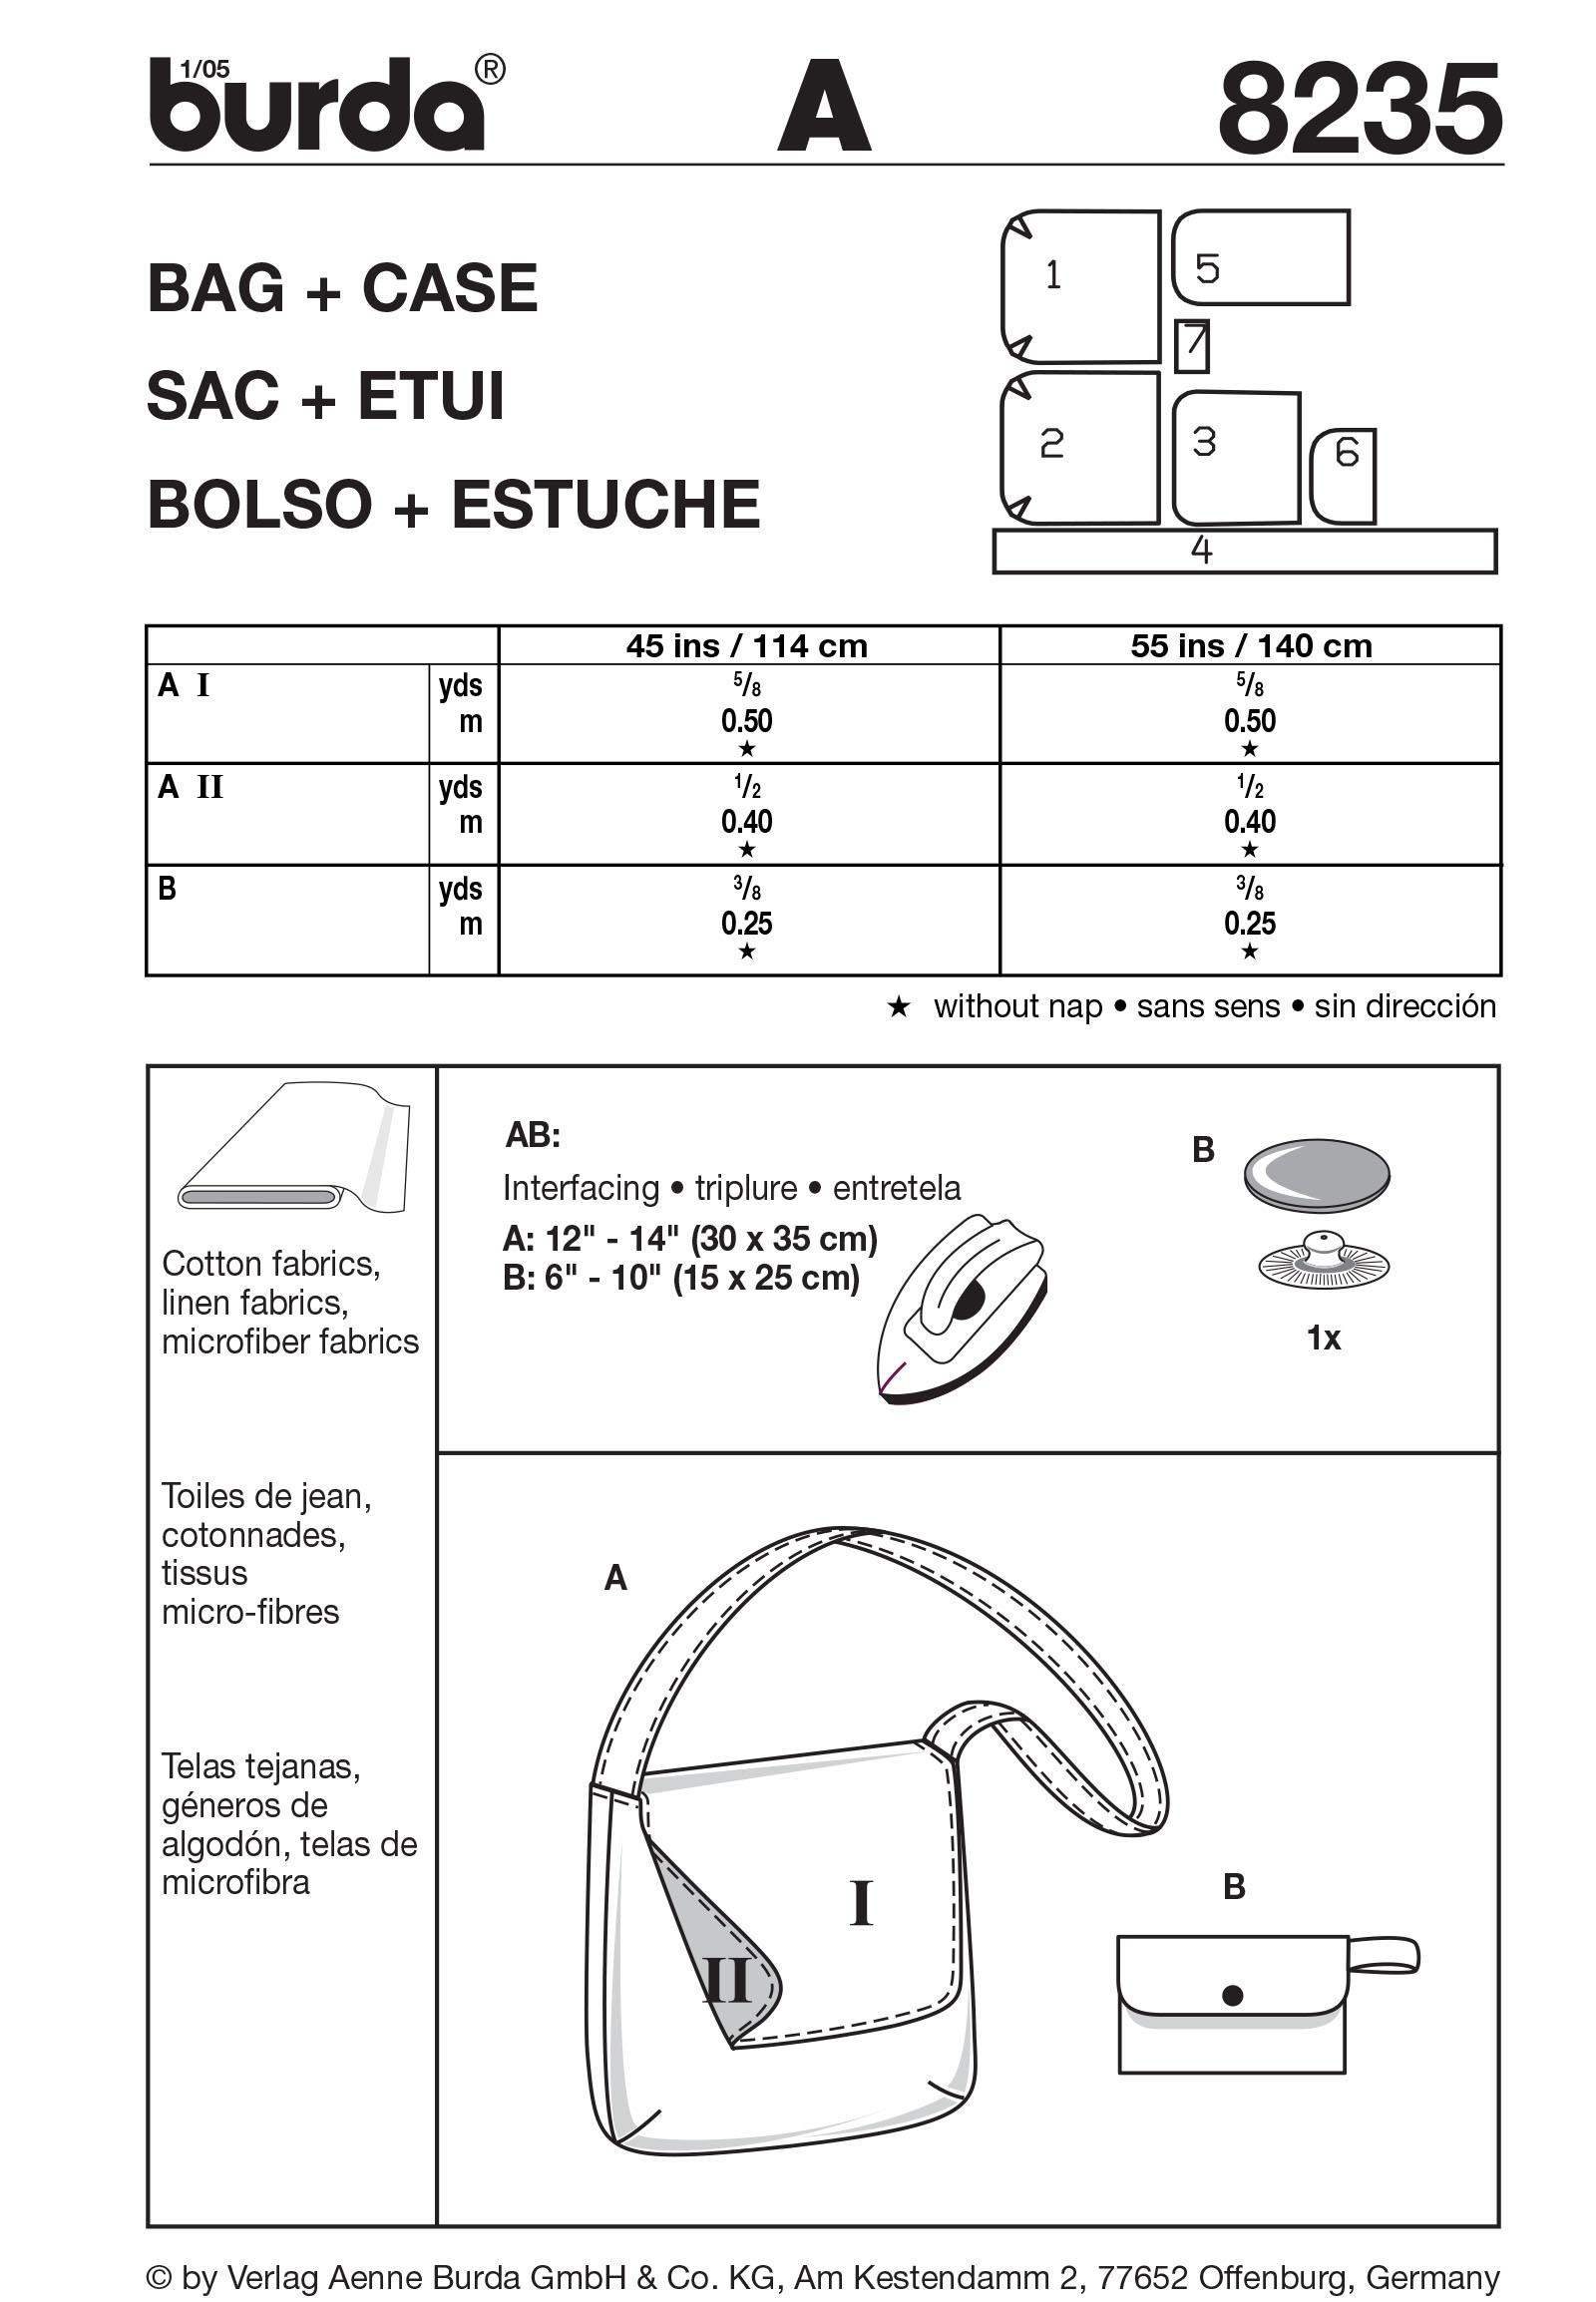 Burda B8235 Bag & Case Sewing Pattern